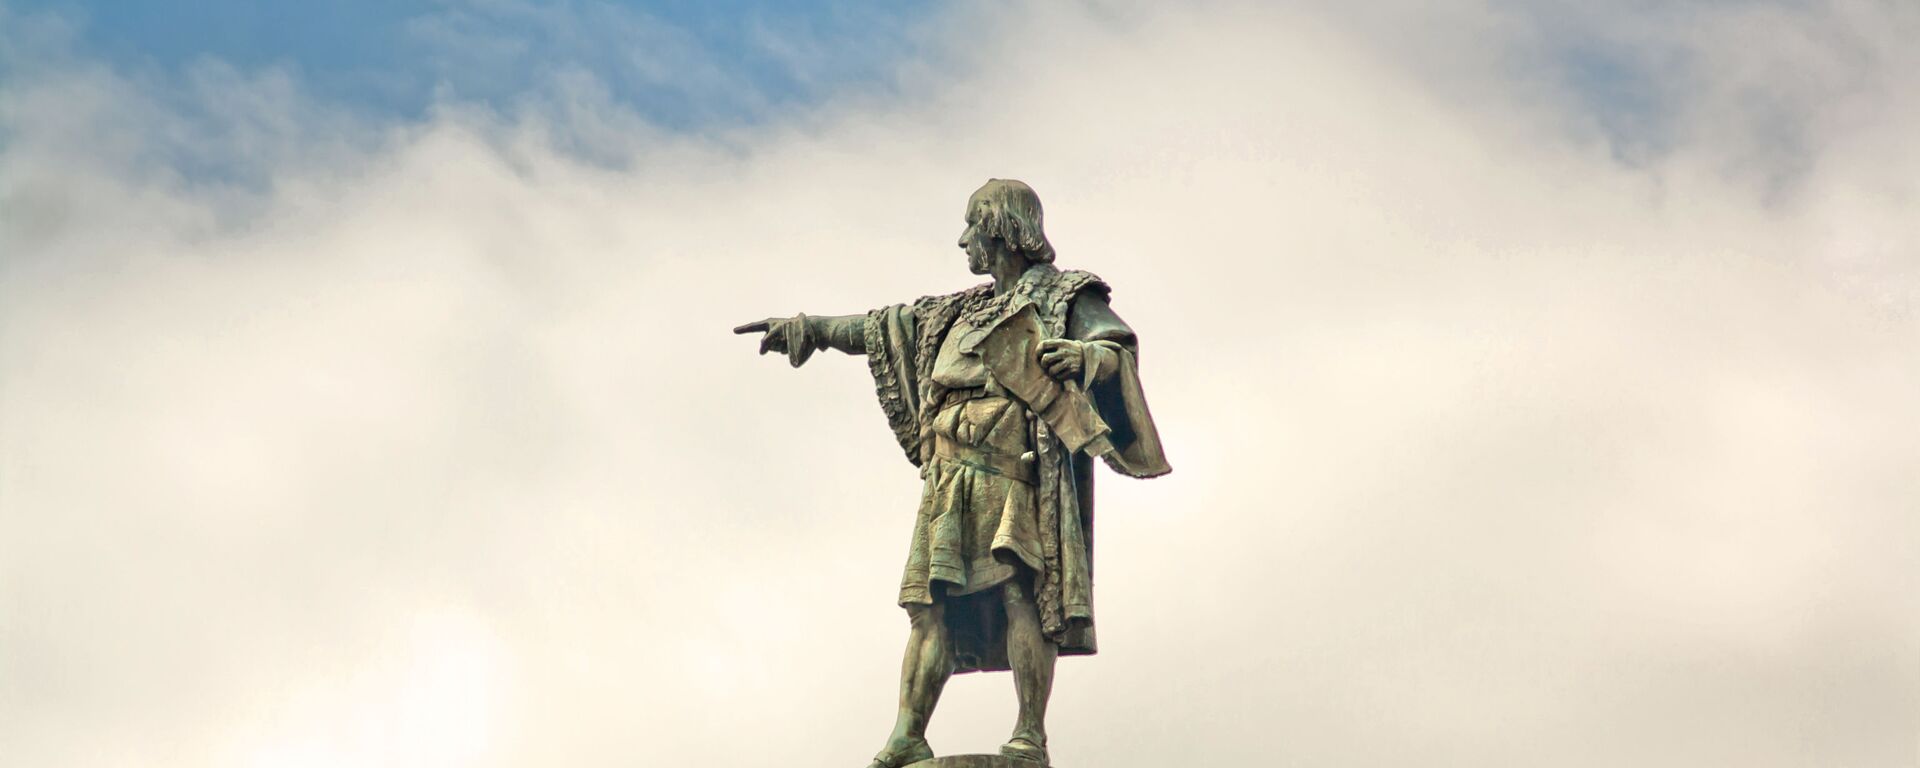 El monumento de Cristóbal Colón en Barcelona, España - Sputnik Mundo, 1920, 12.10.2022